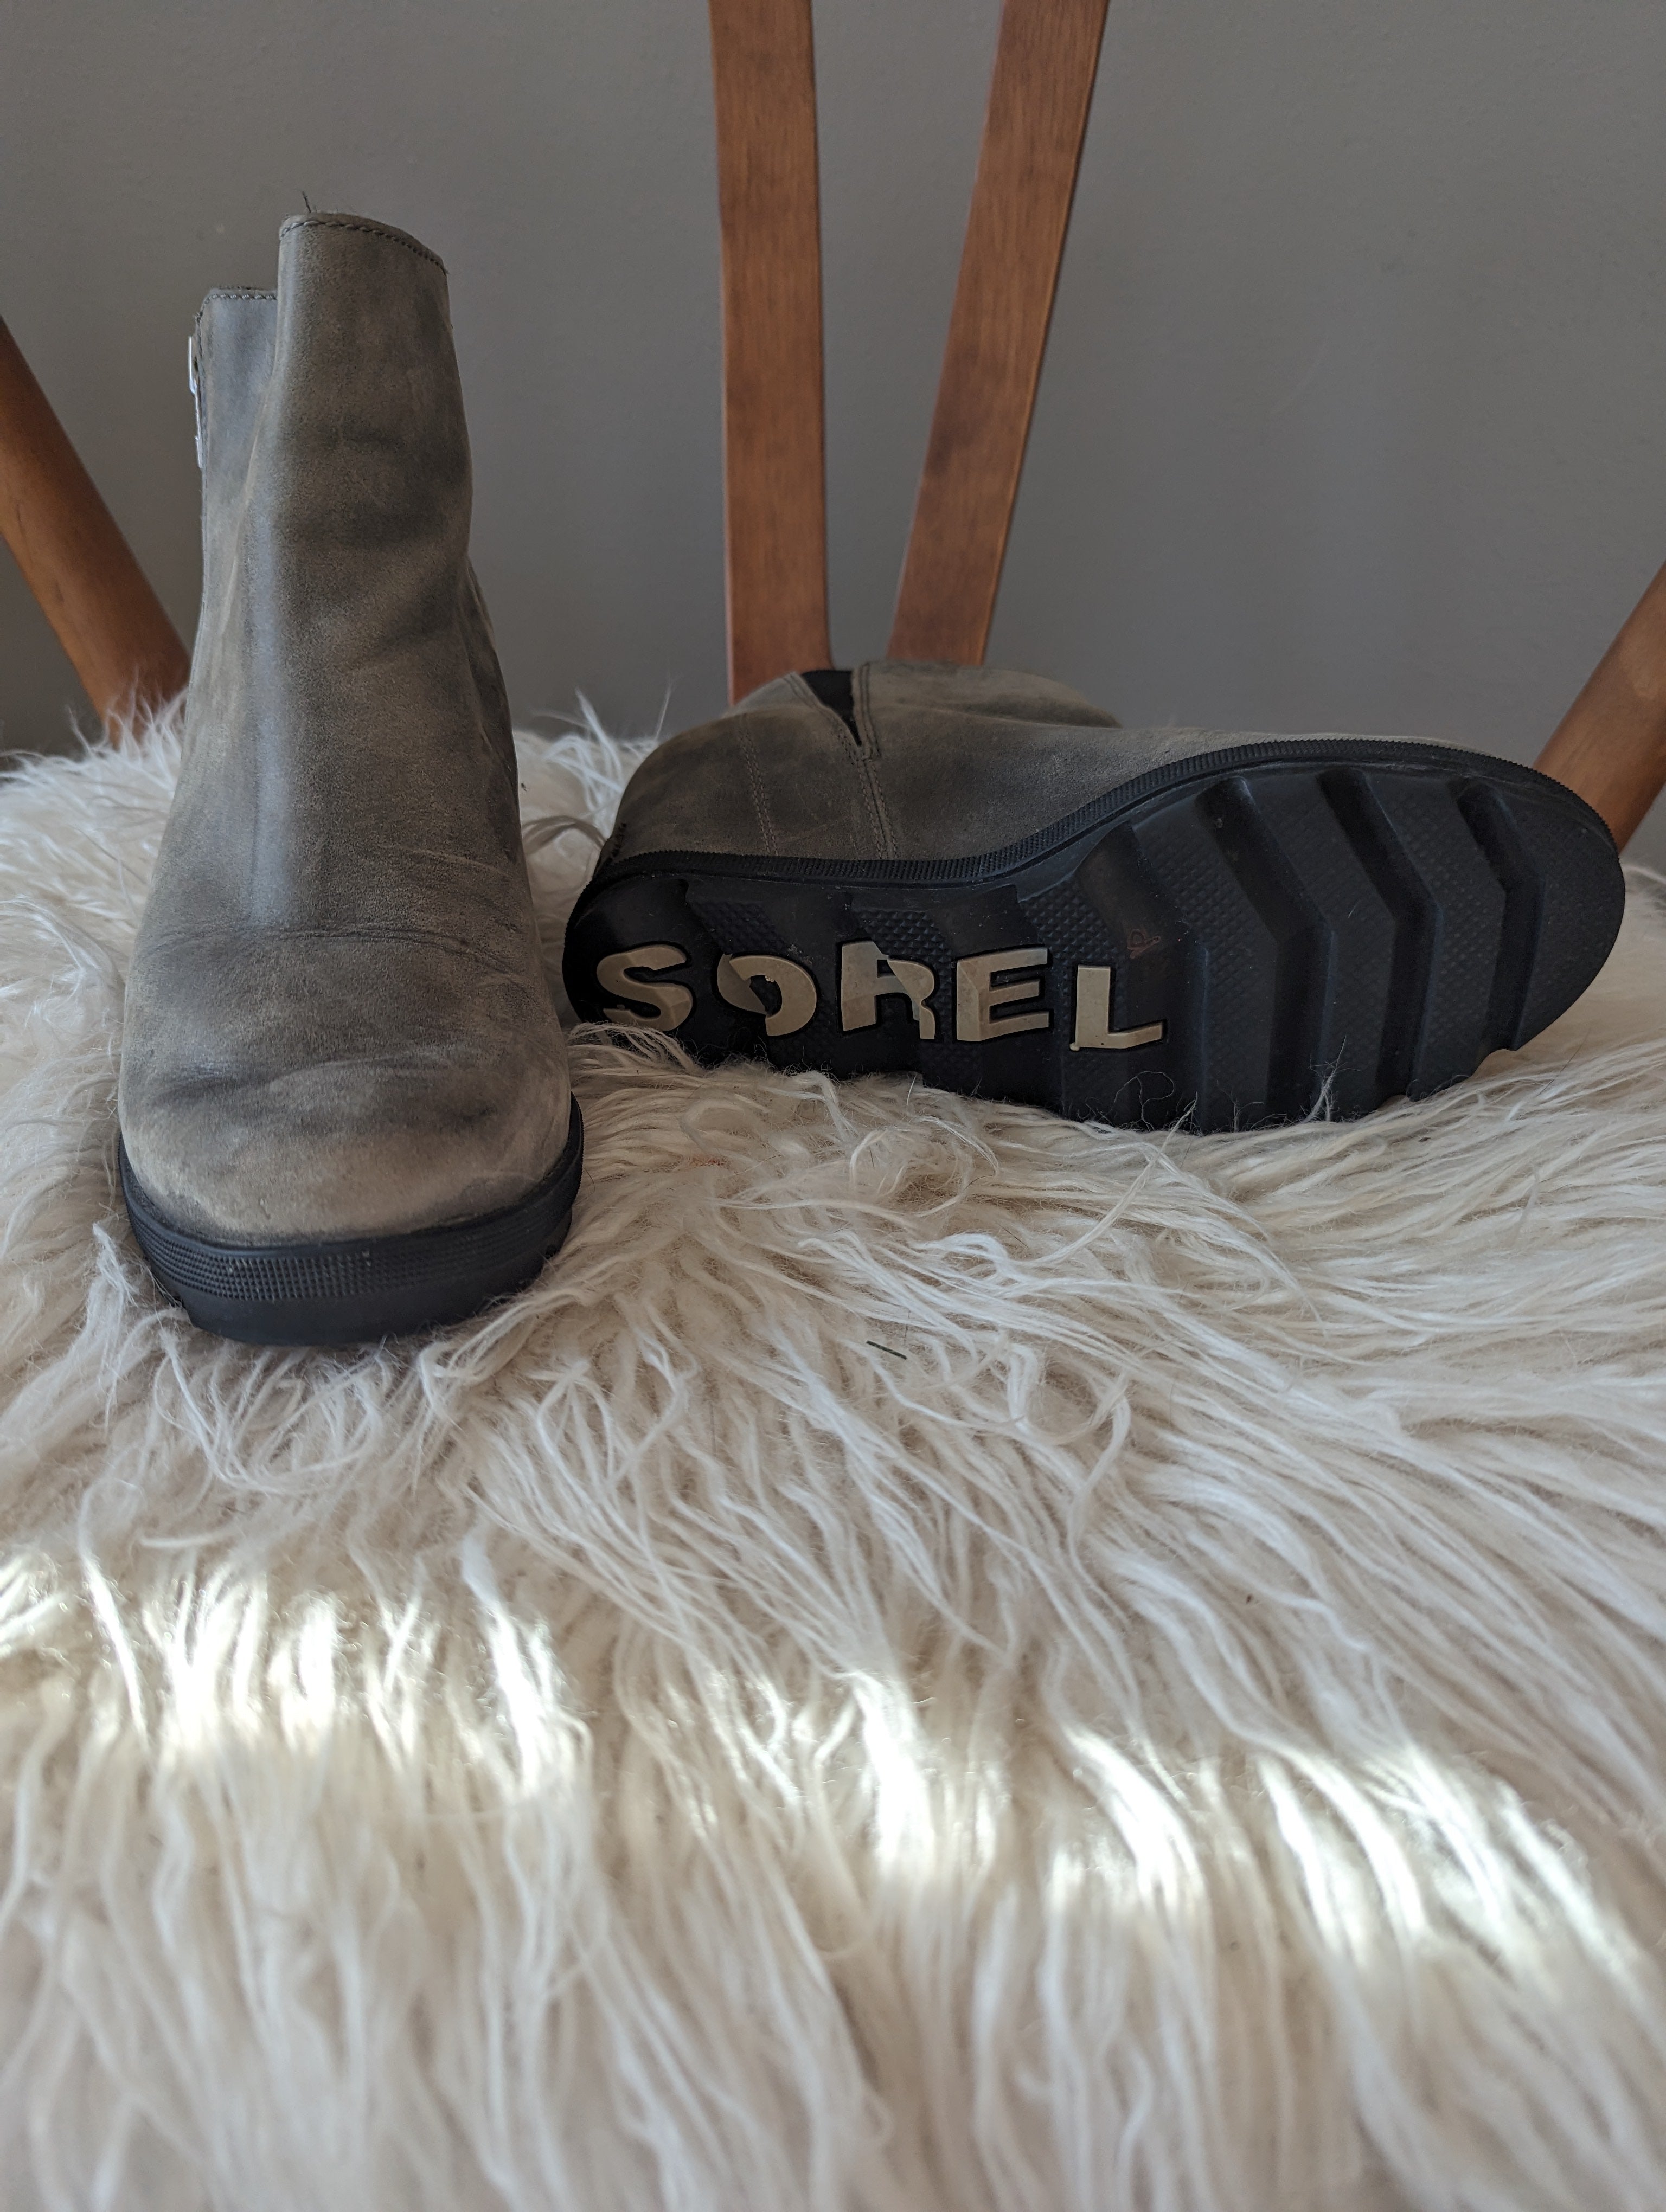 Sorel Wedge Boots